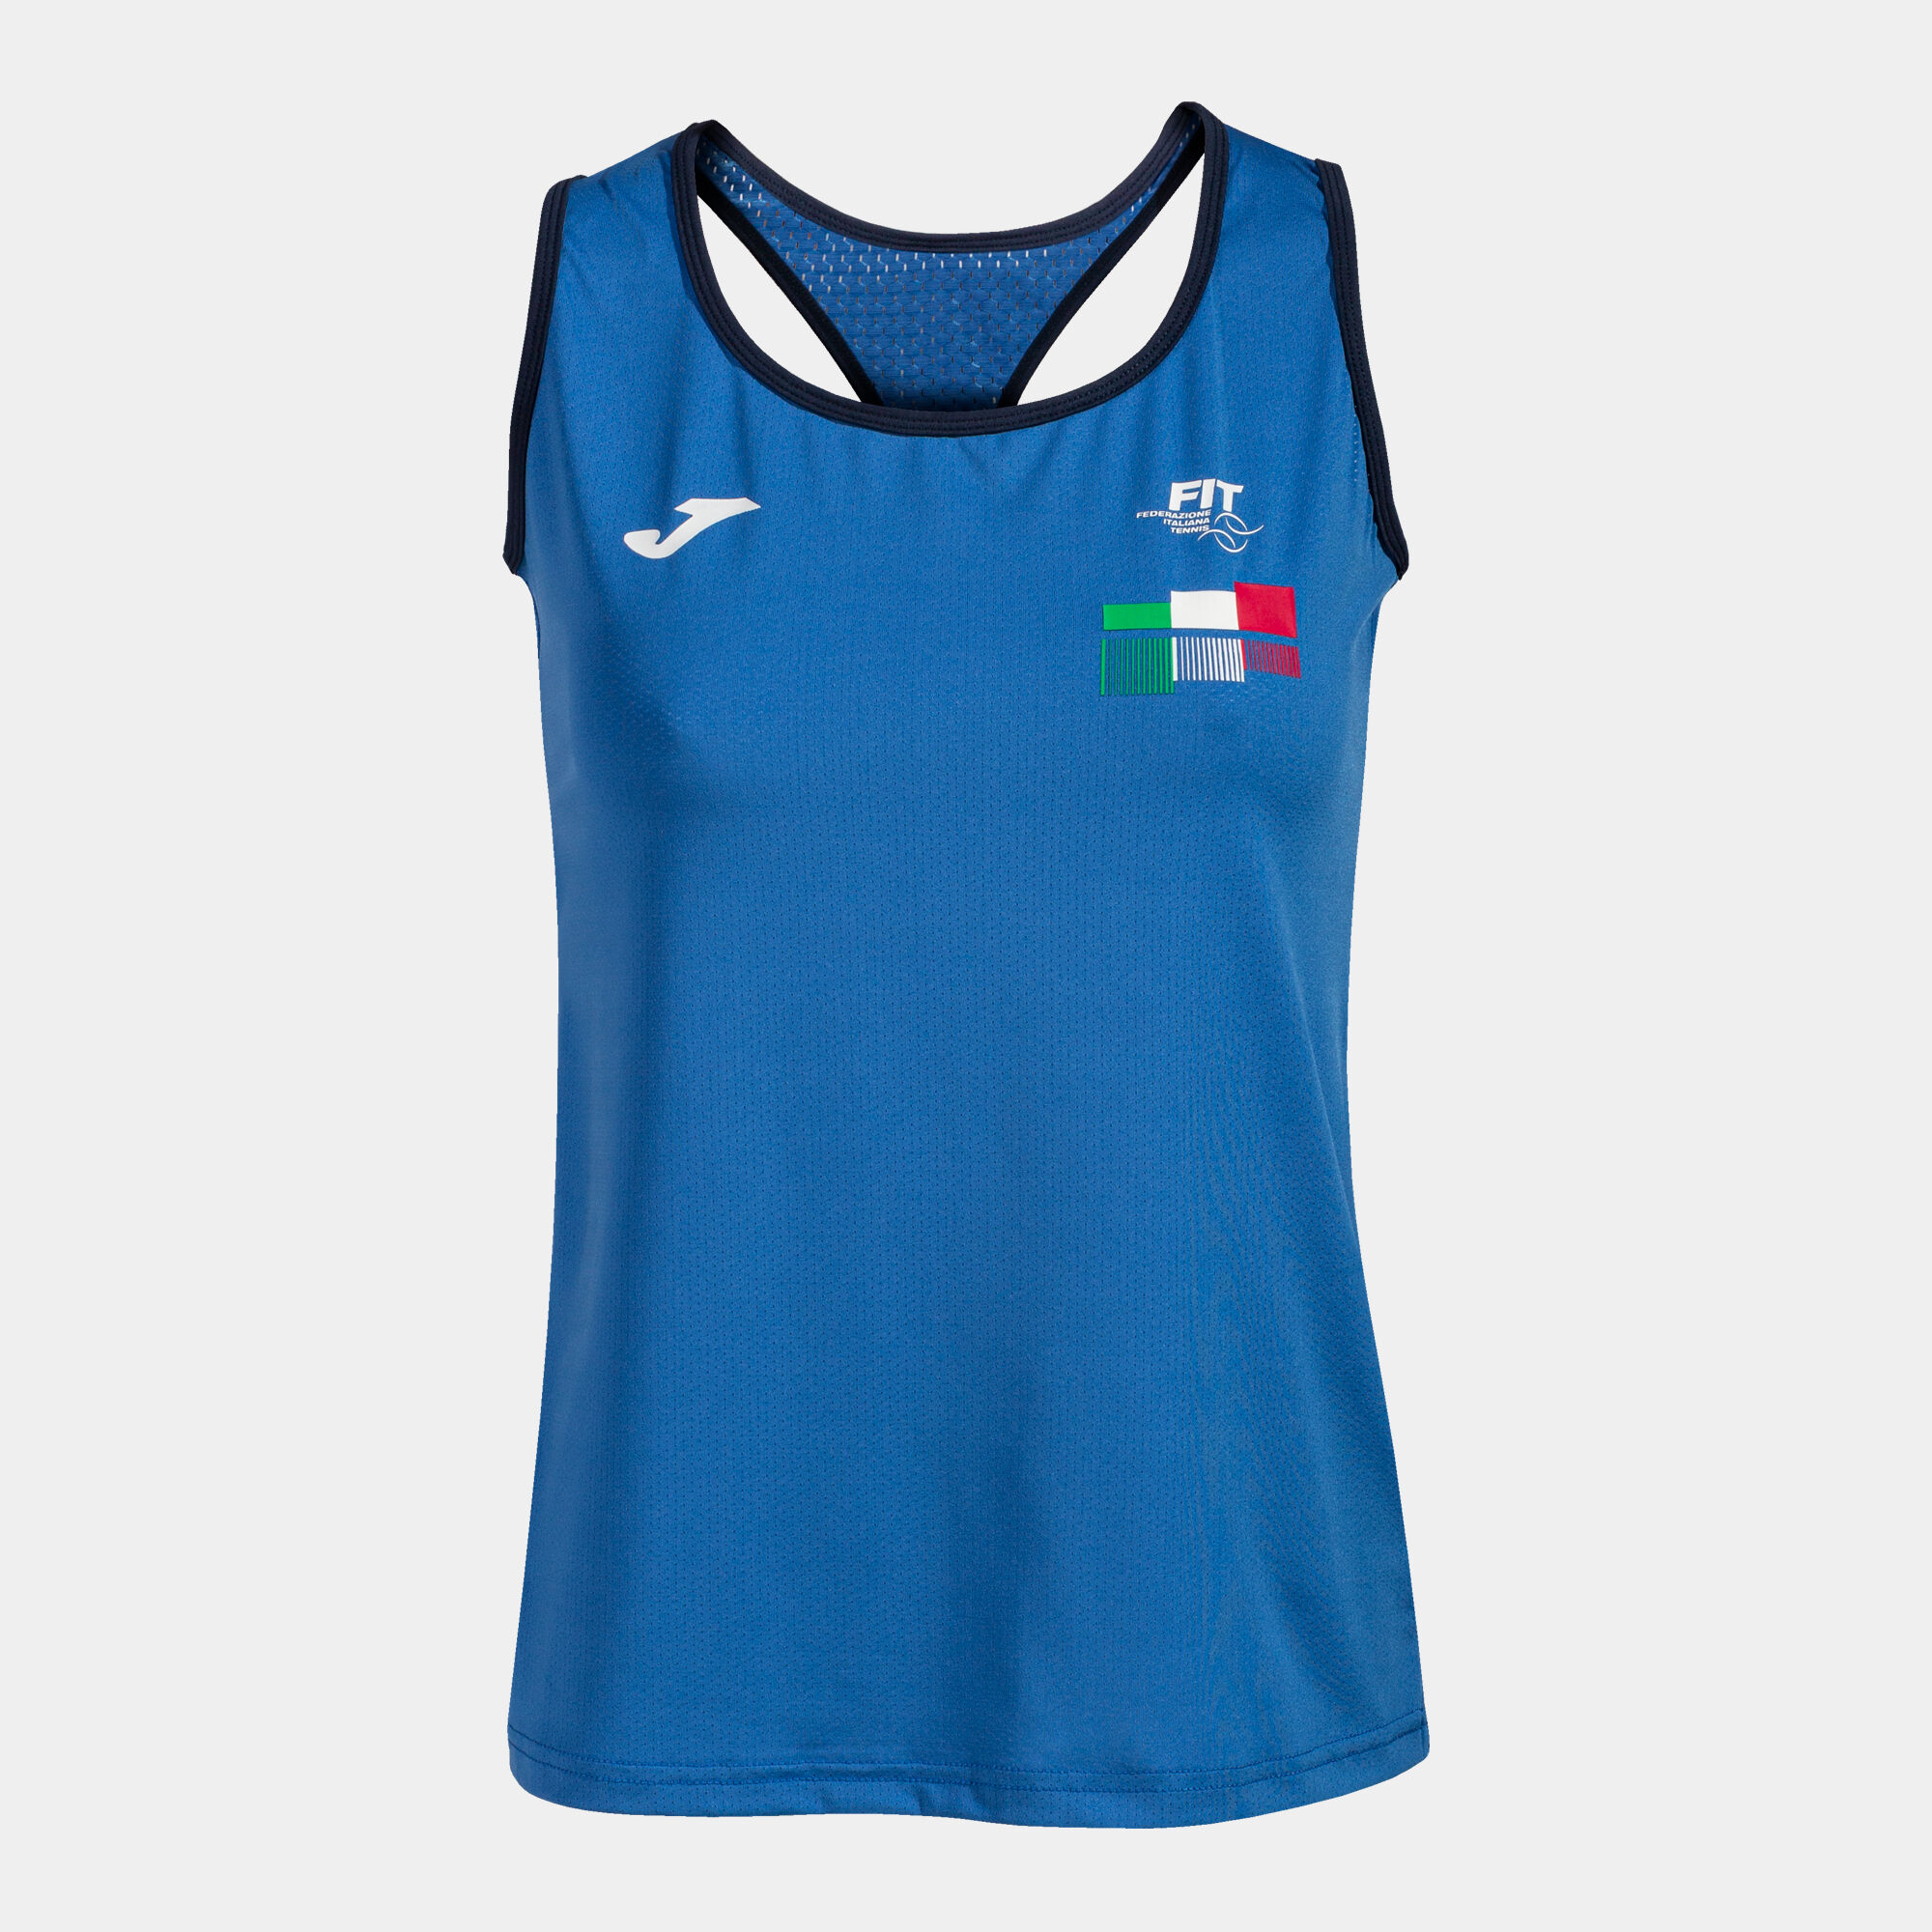 Camiseta tirantes Federación Italiana Tenis mujer